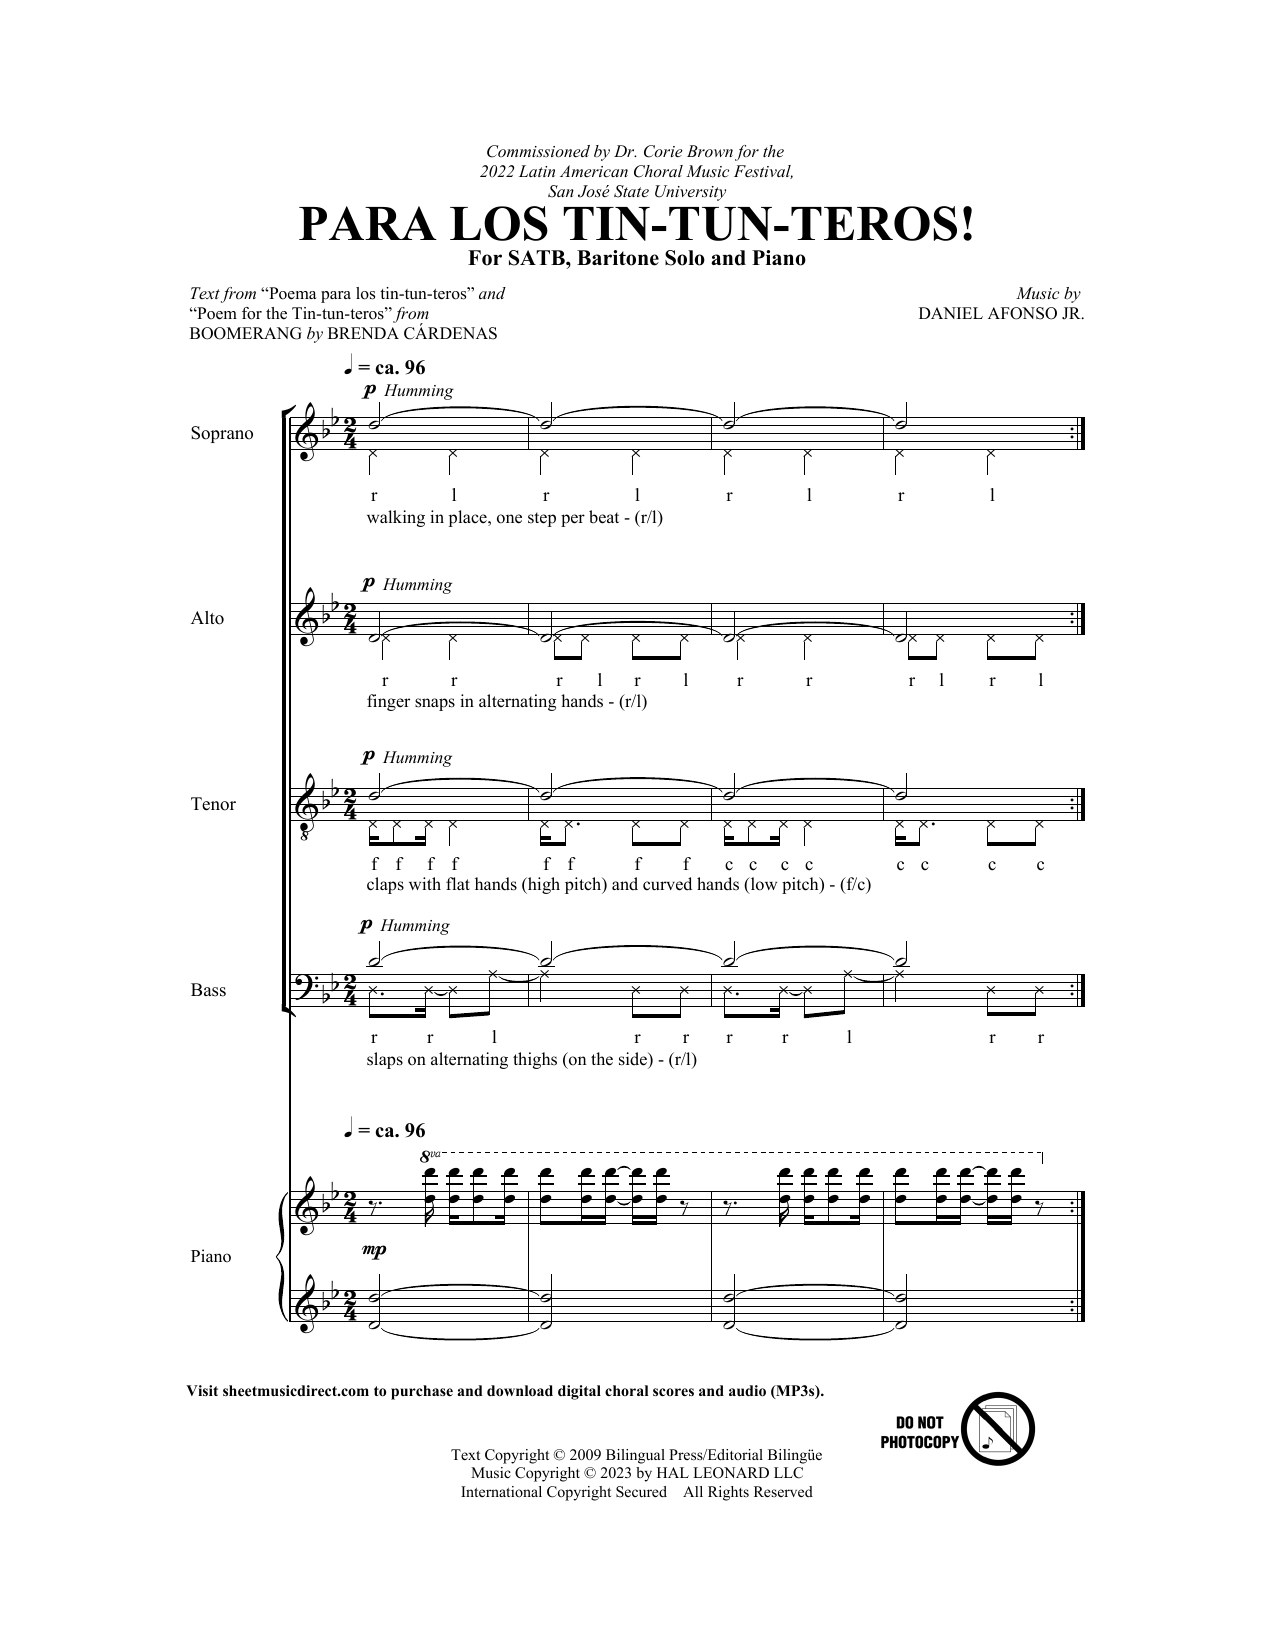 Download Daniel Afonso Para los tin-tun-teros! Sheet Music and learn how to play SATB Choir PDF digital score in minutes